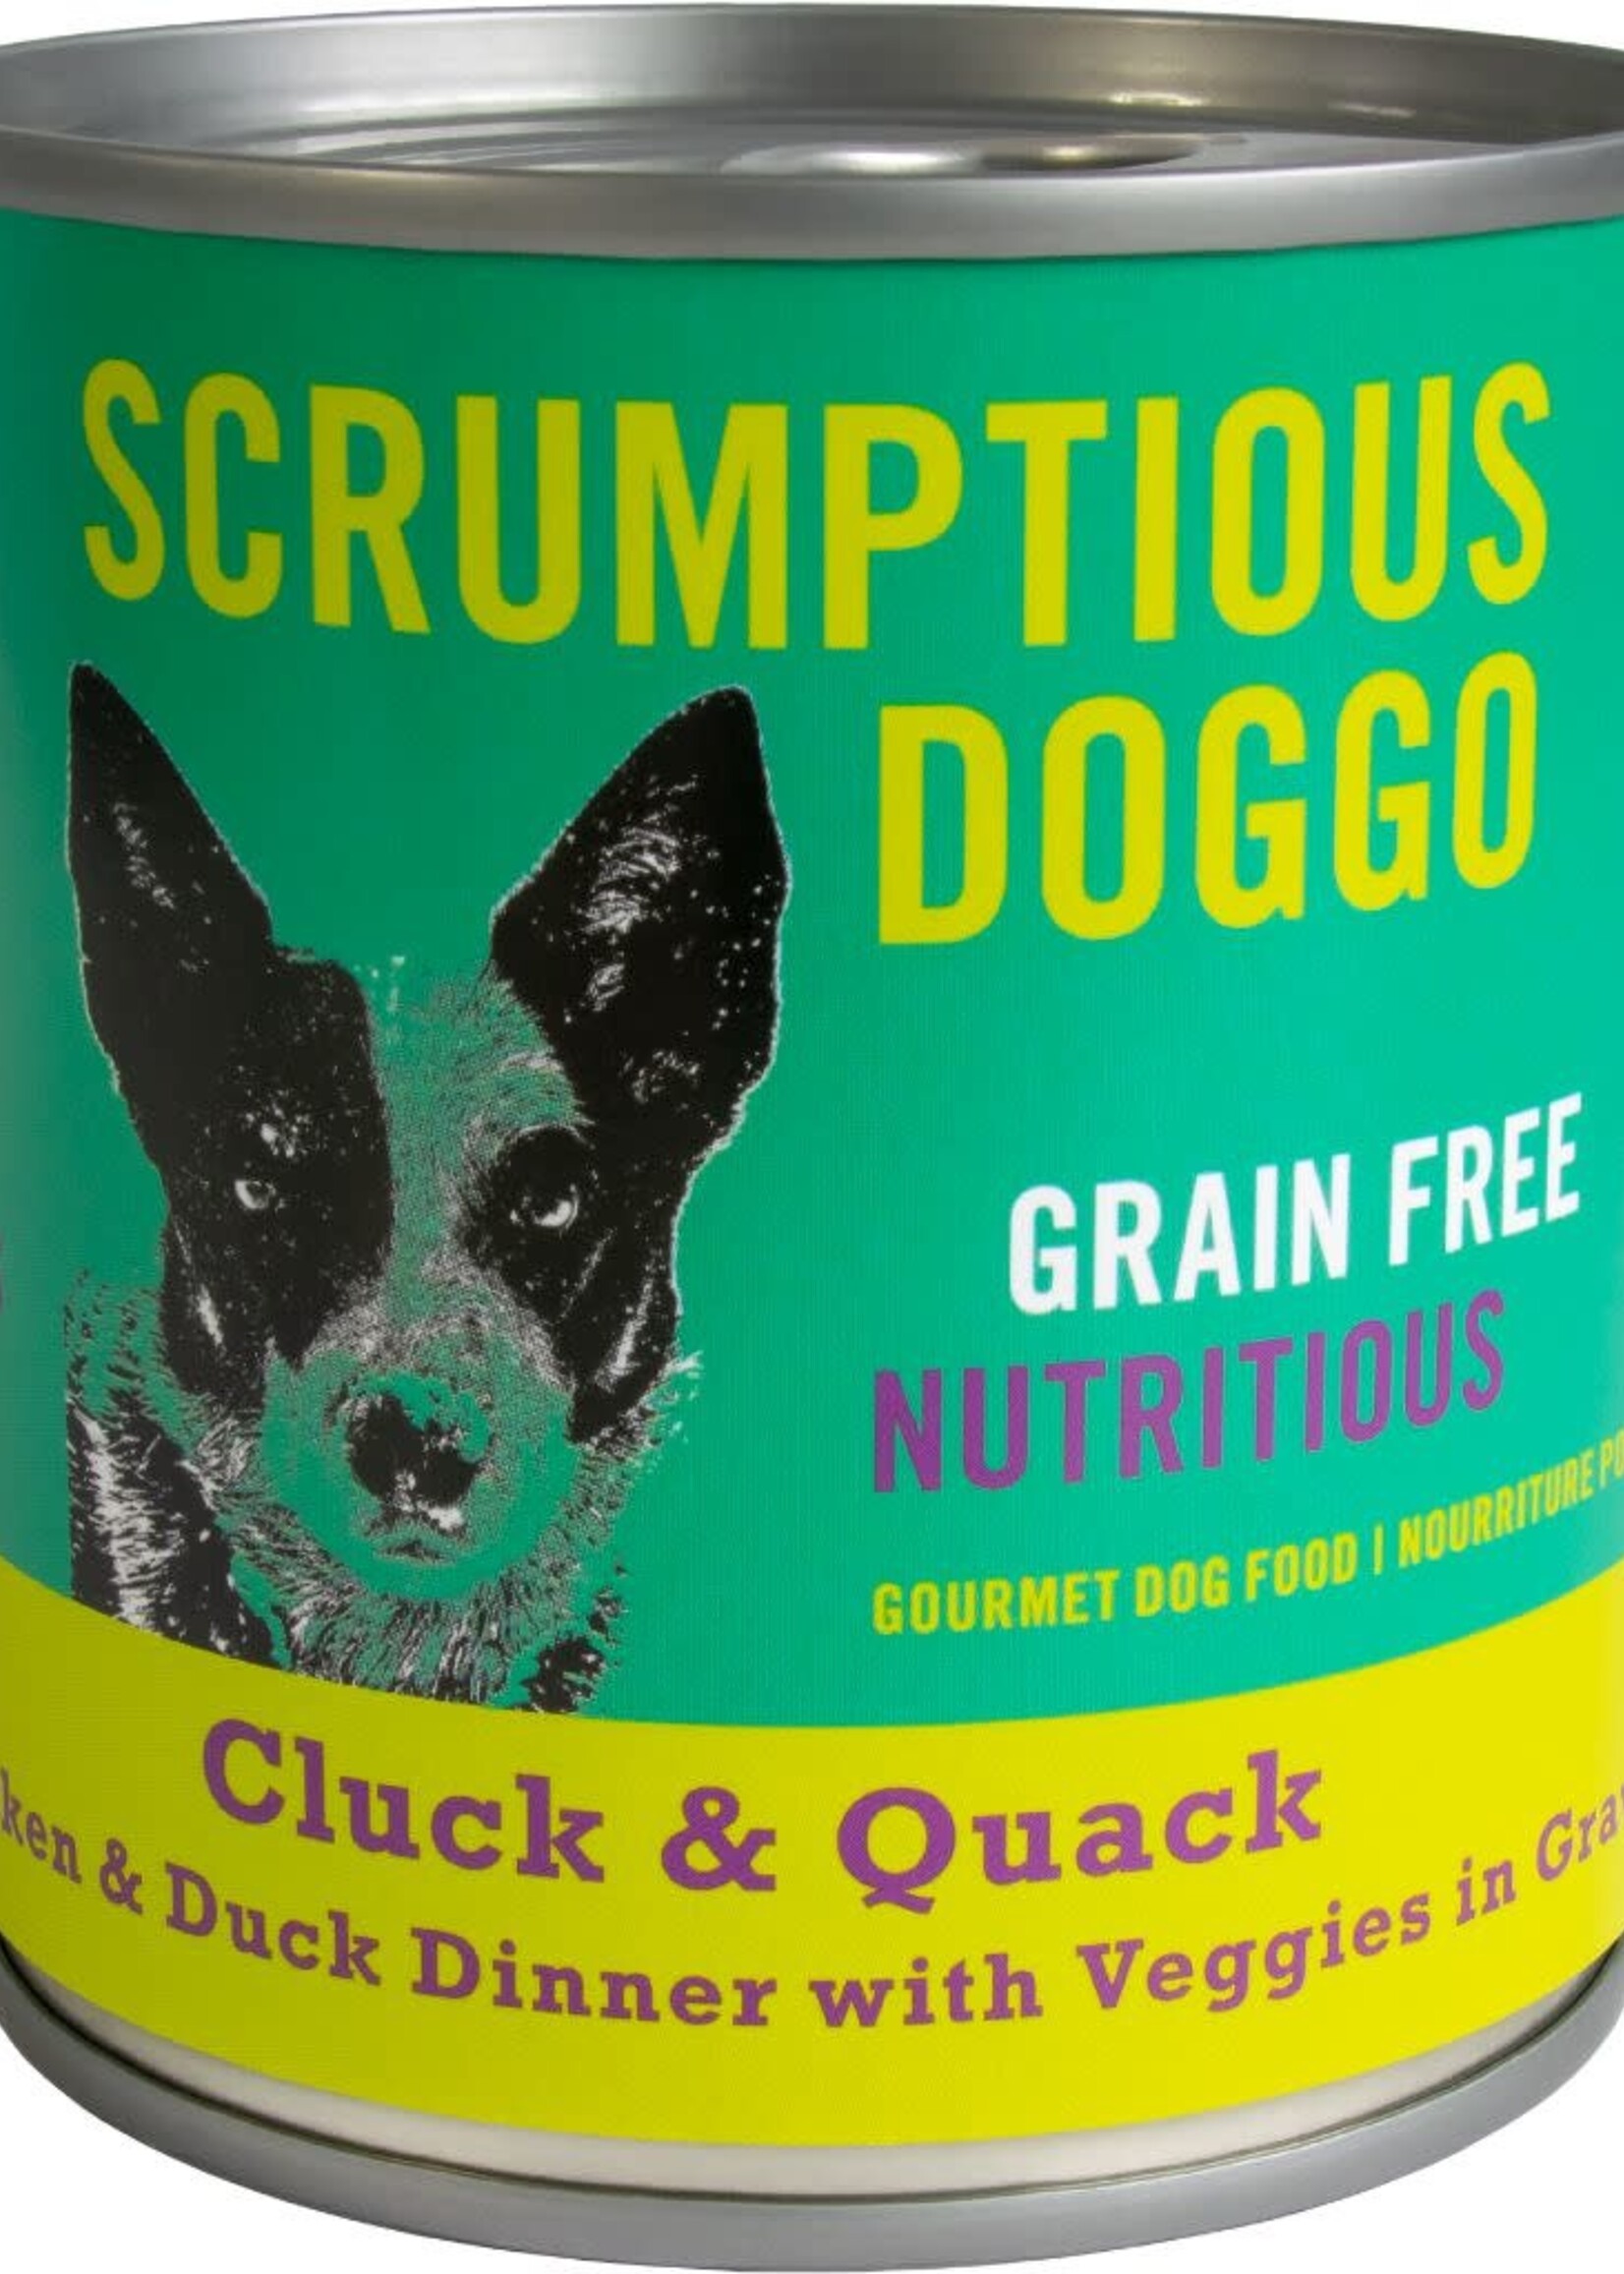 Scrumptious Scrumptious Doggo - Cluck & Quack Chicken & Duck Dinner